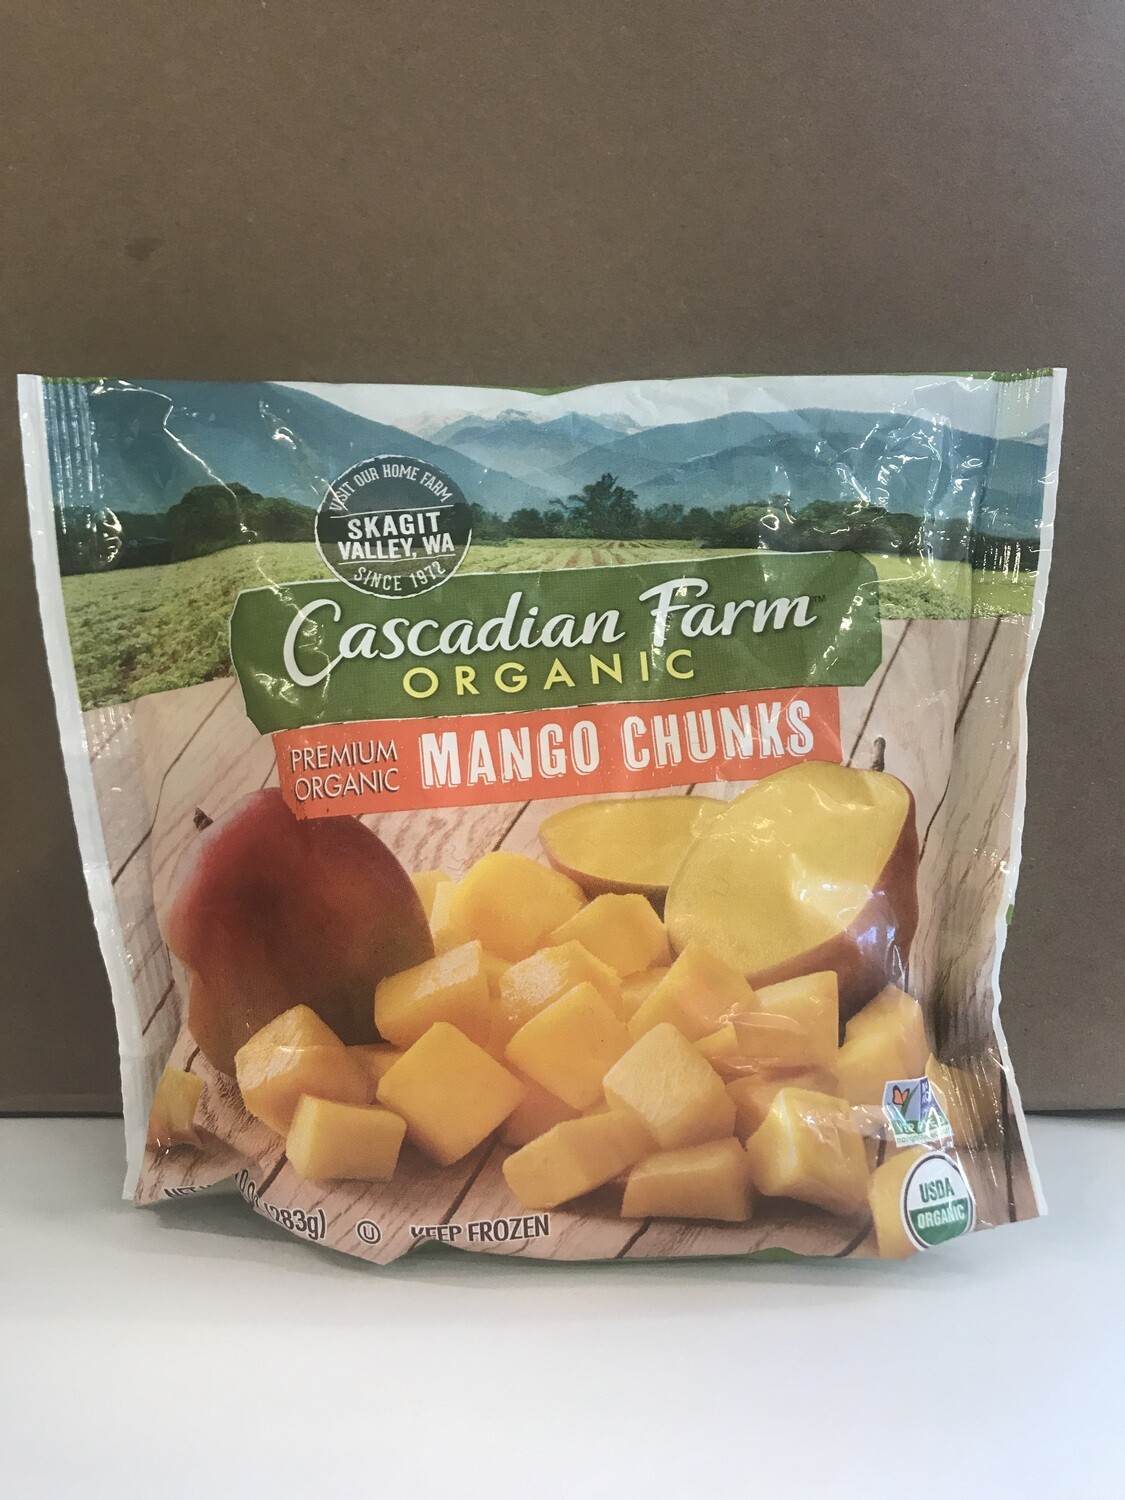 Frozen / Fruit / Cascadian Farms Organic Mango Chunks, 10 oz.